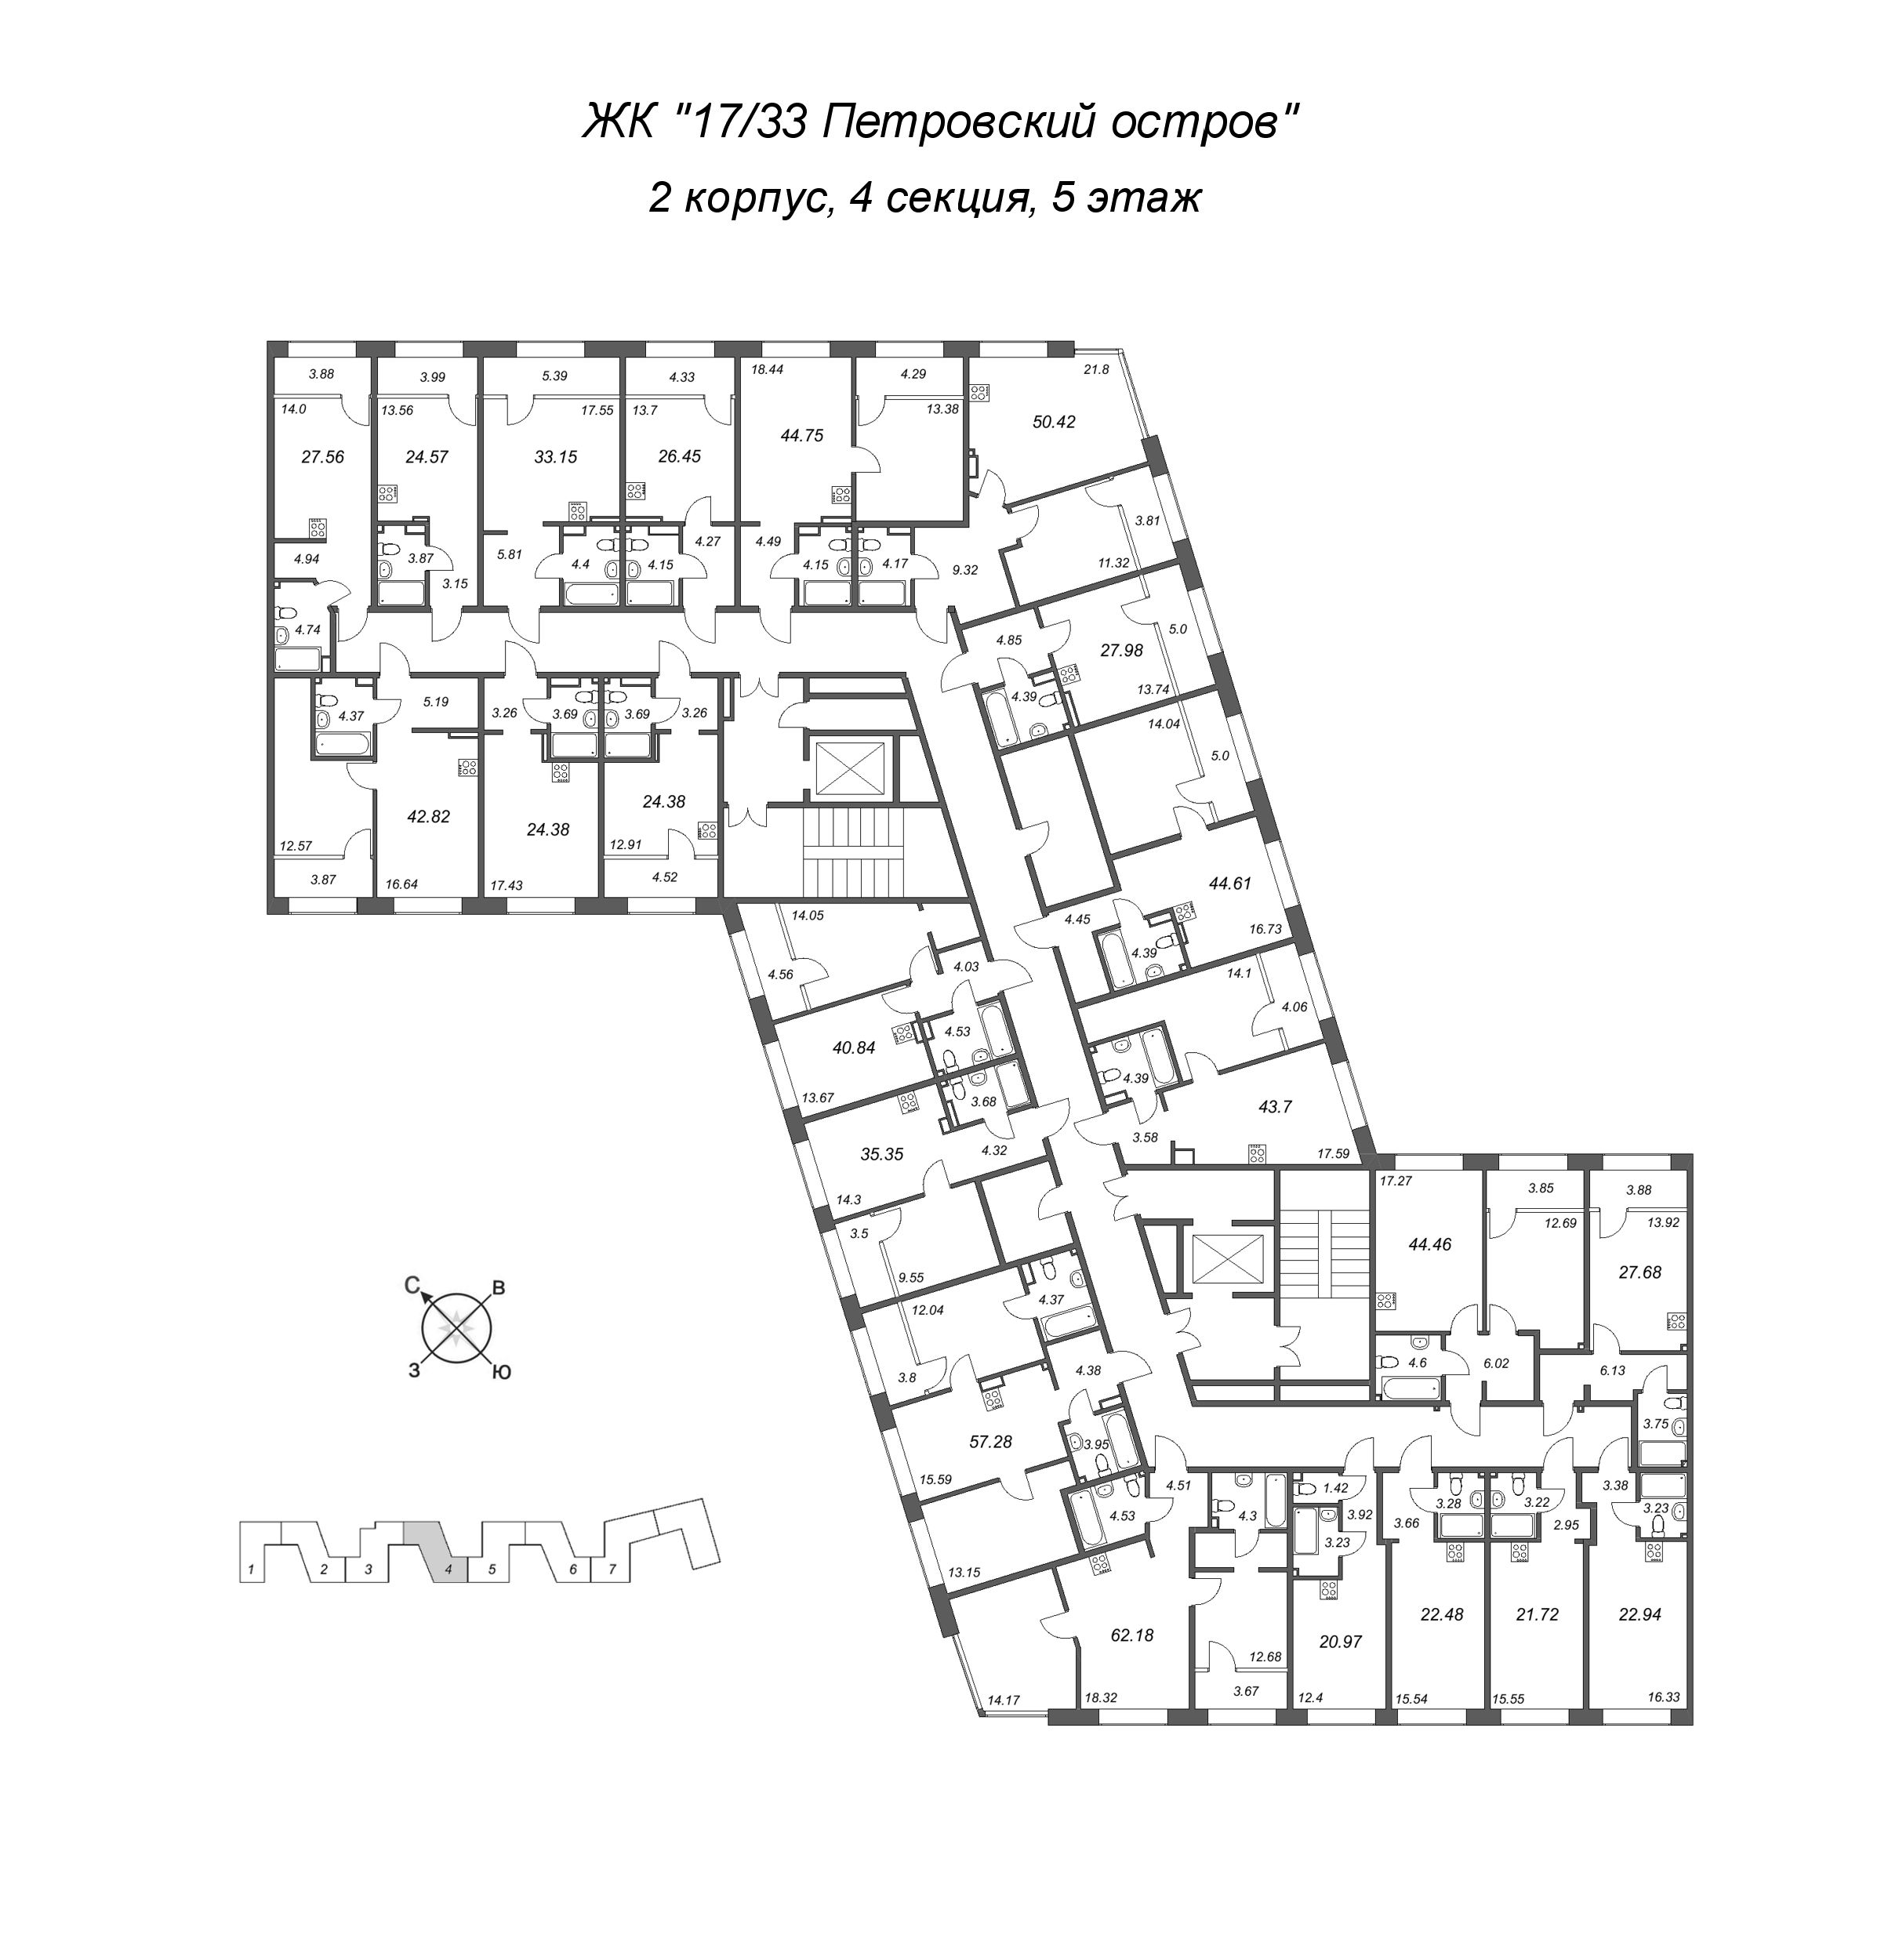 2-комнатная (Евро) квартира, 44.61 м² - планировка этажа